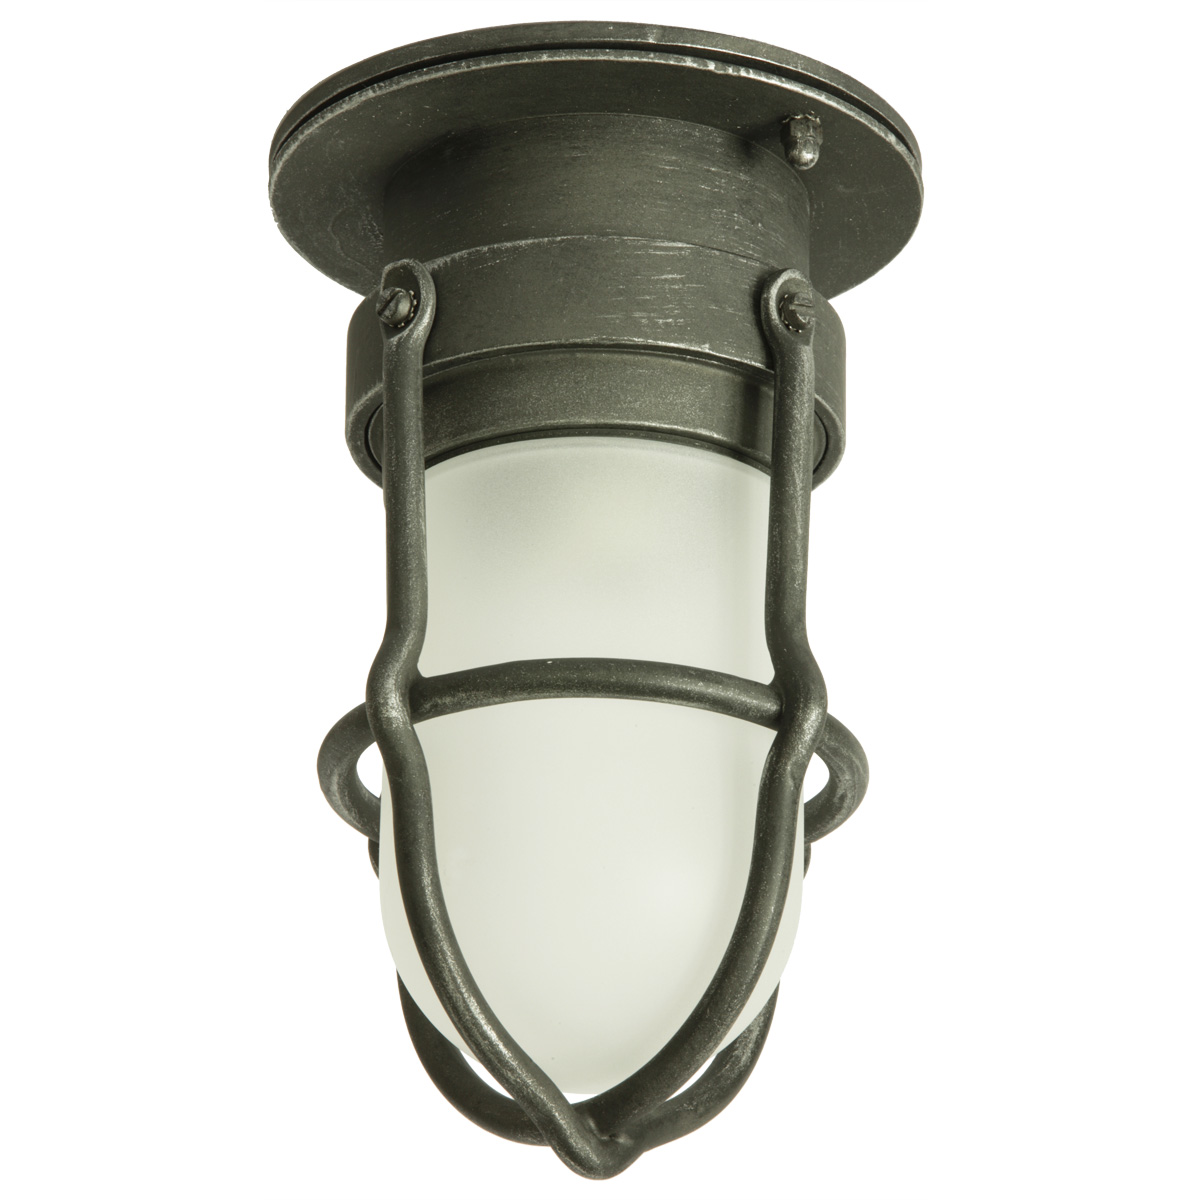 Wrought-Iron Ceiling Light DE 2583